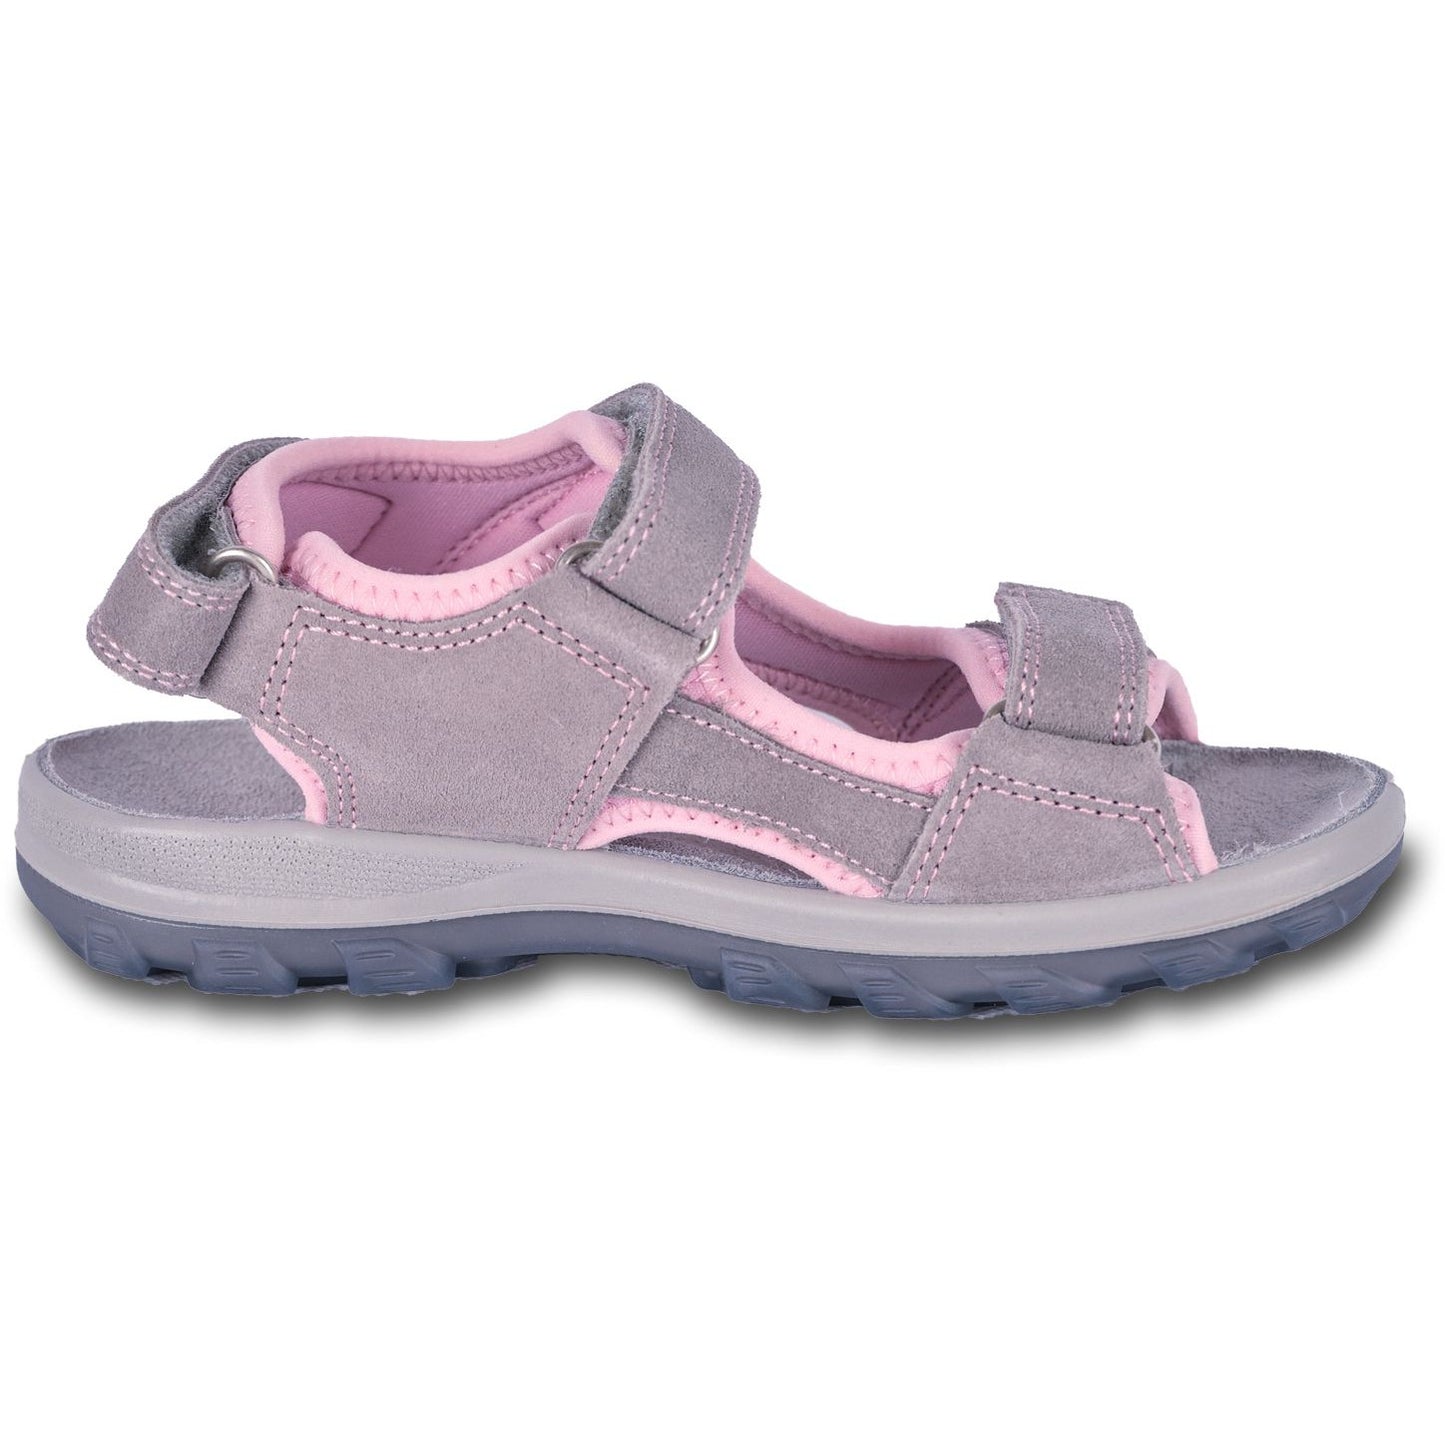 KORY pink older girls arch support sandals